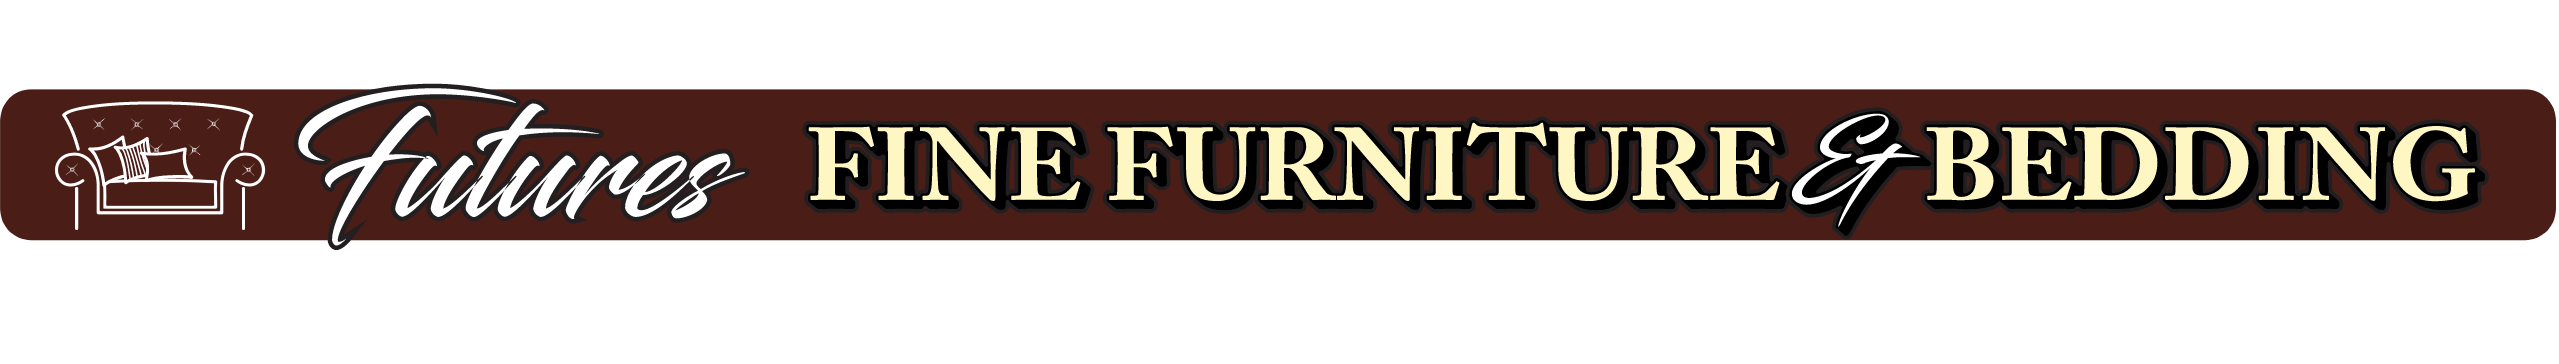 futuresfinefurnitureandbedding.com